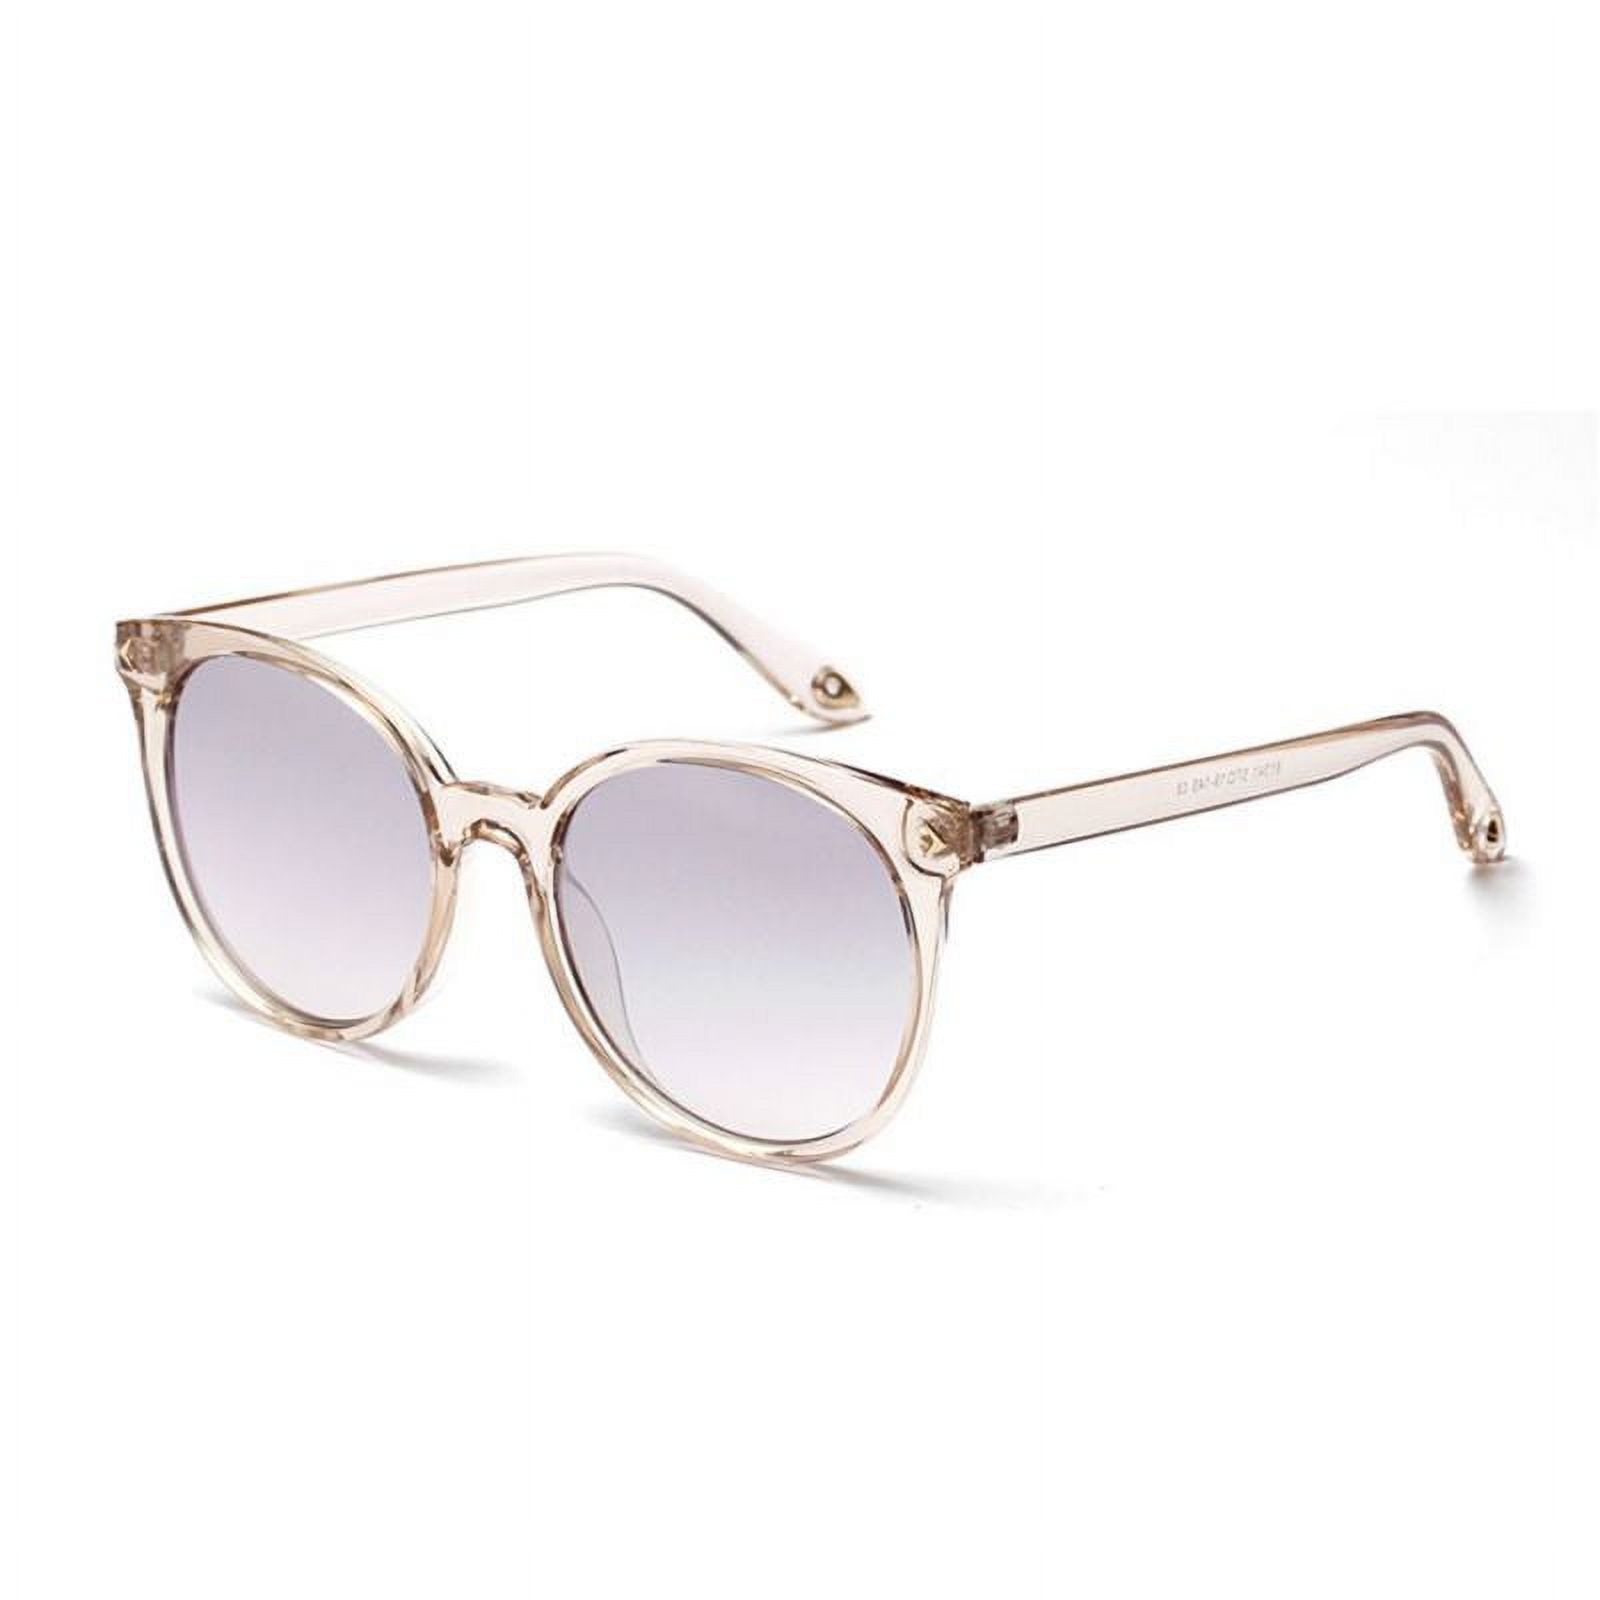 Womens Fashion Sun Glasses UV Protection Sunglasses Polarized Sunglasses - image 1 of 6